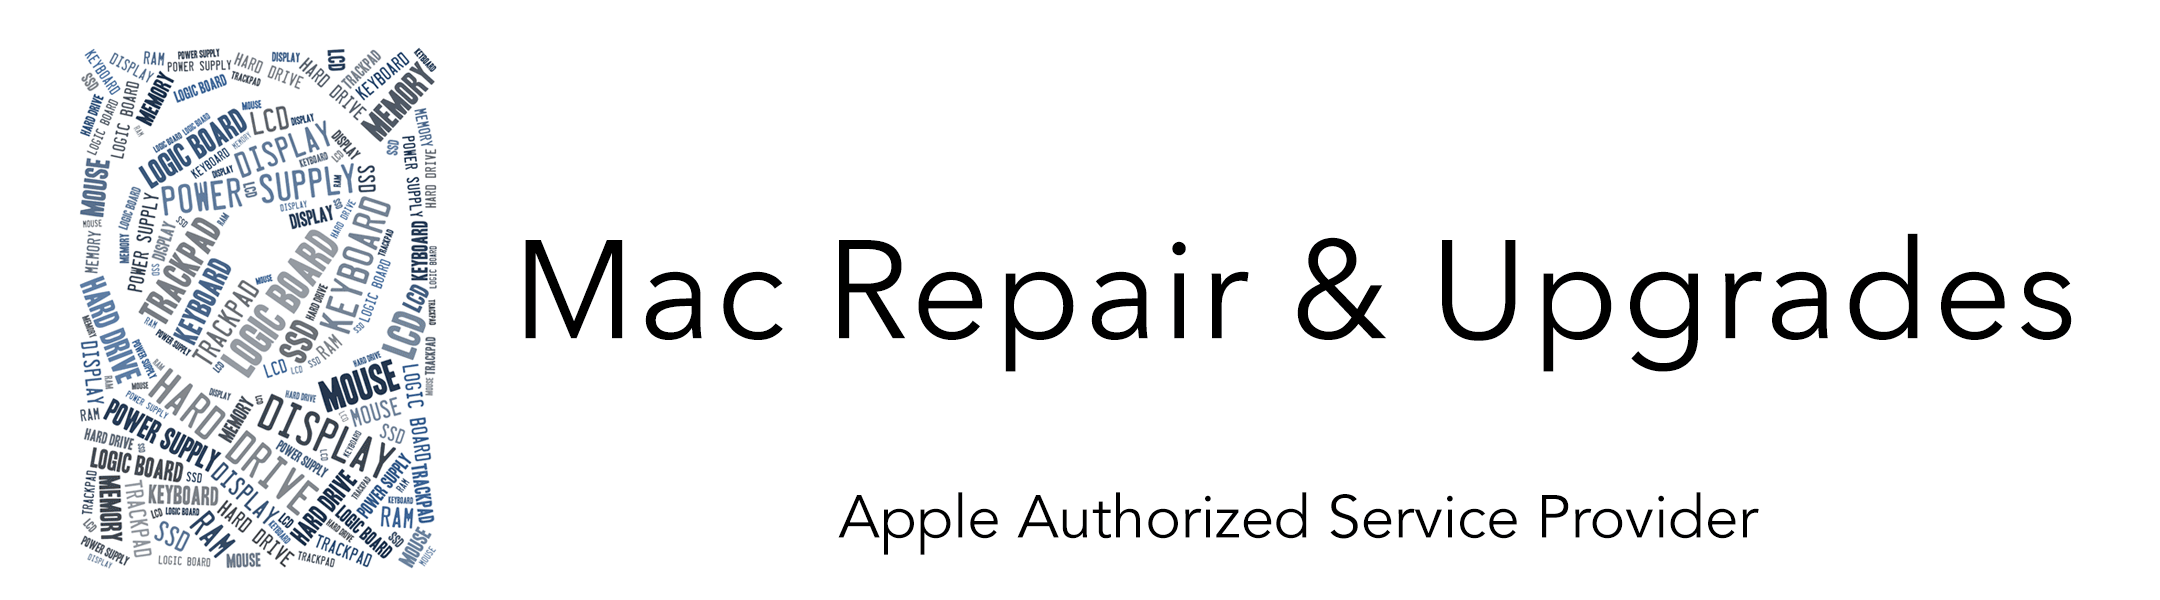 Mac Repairs and upgrades